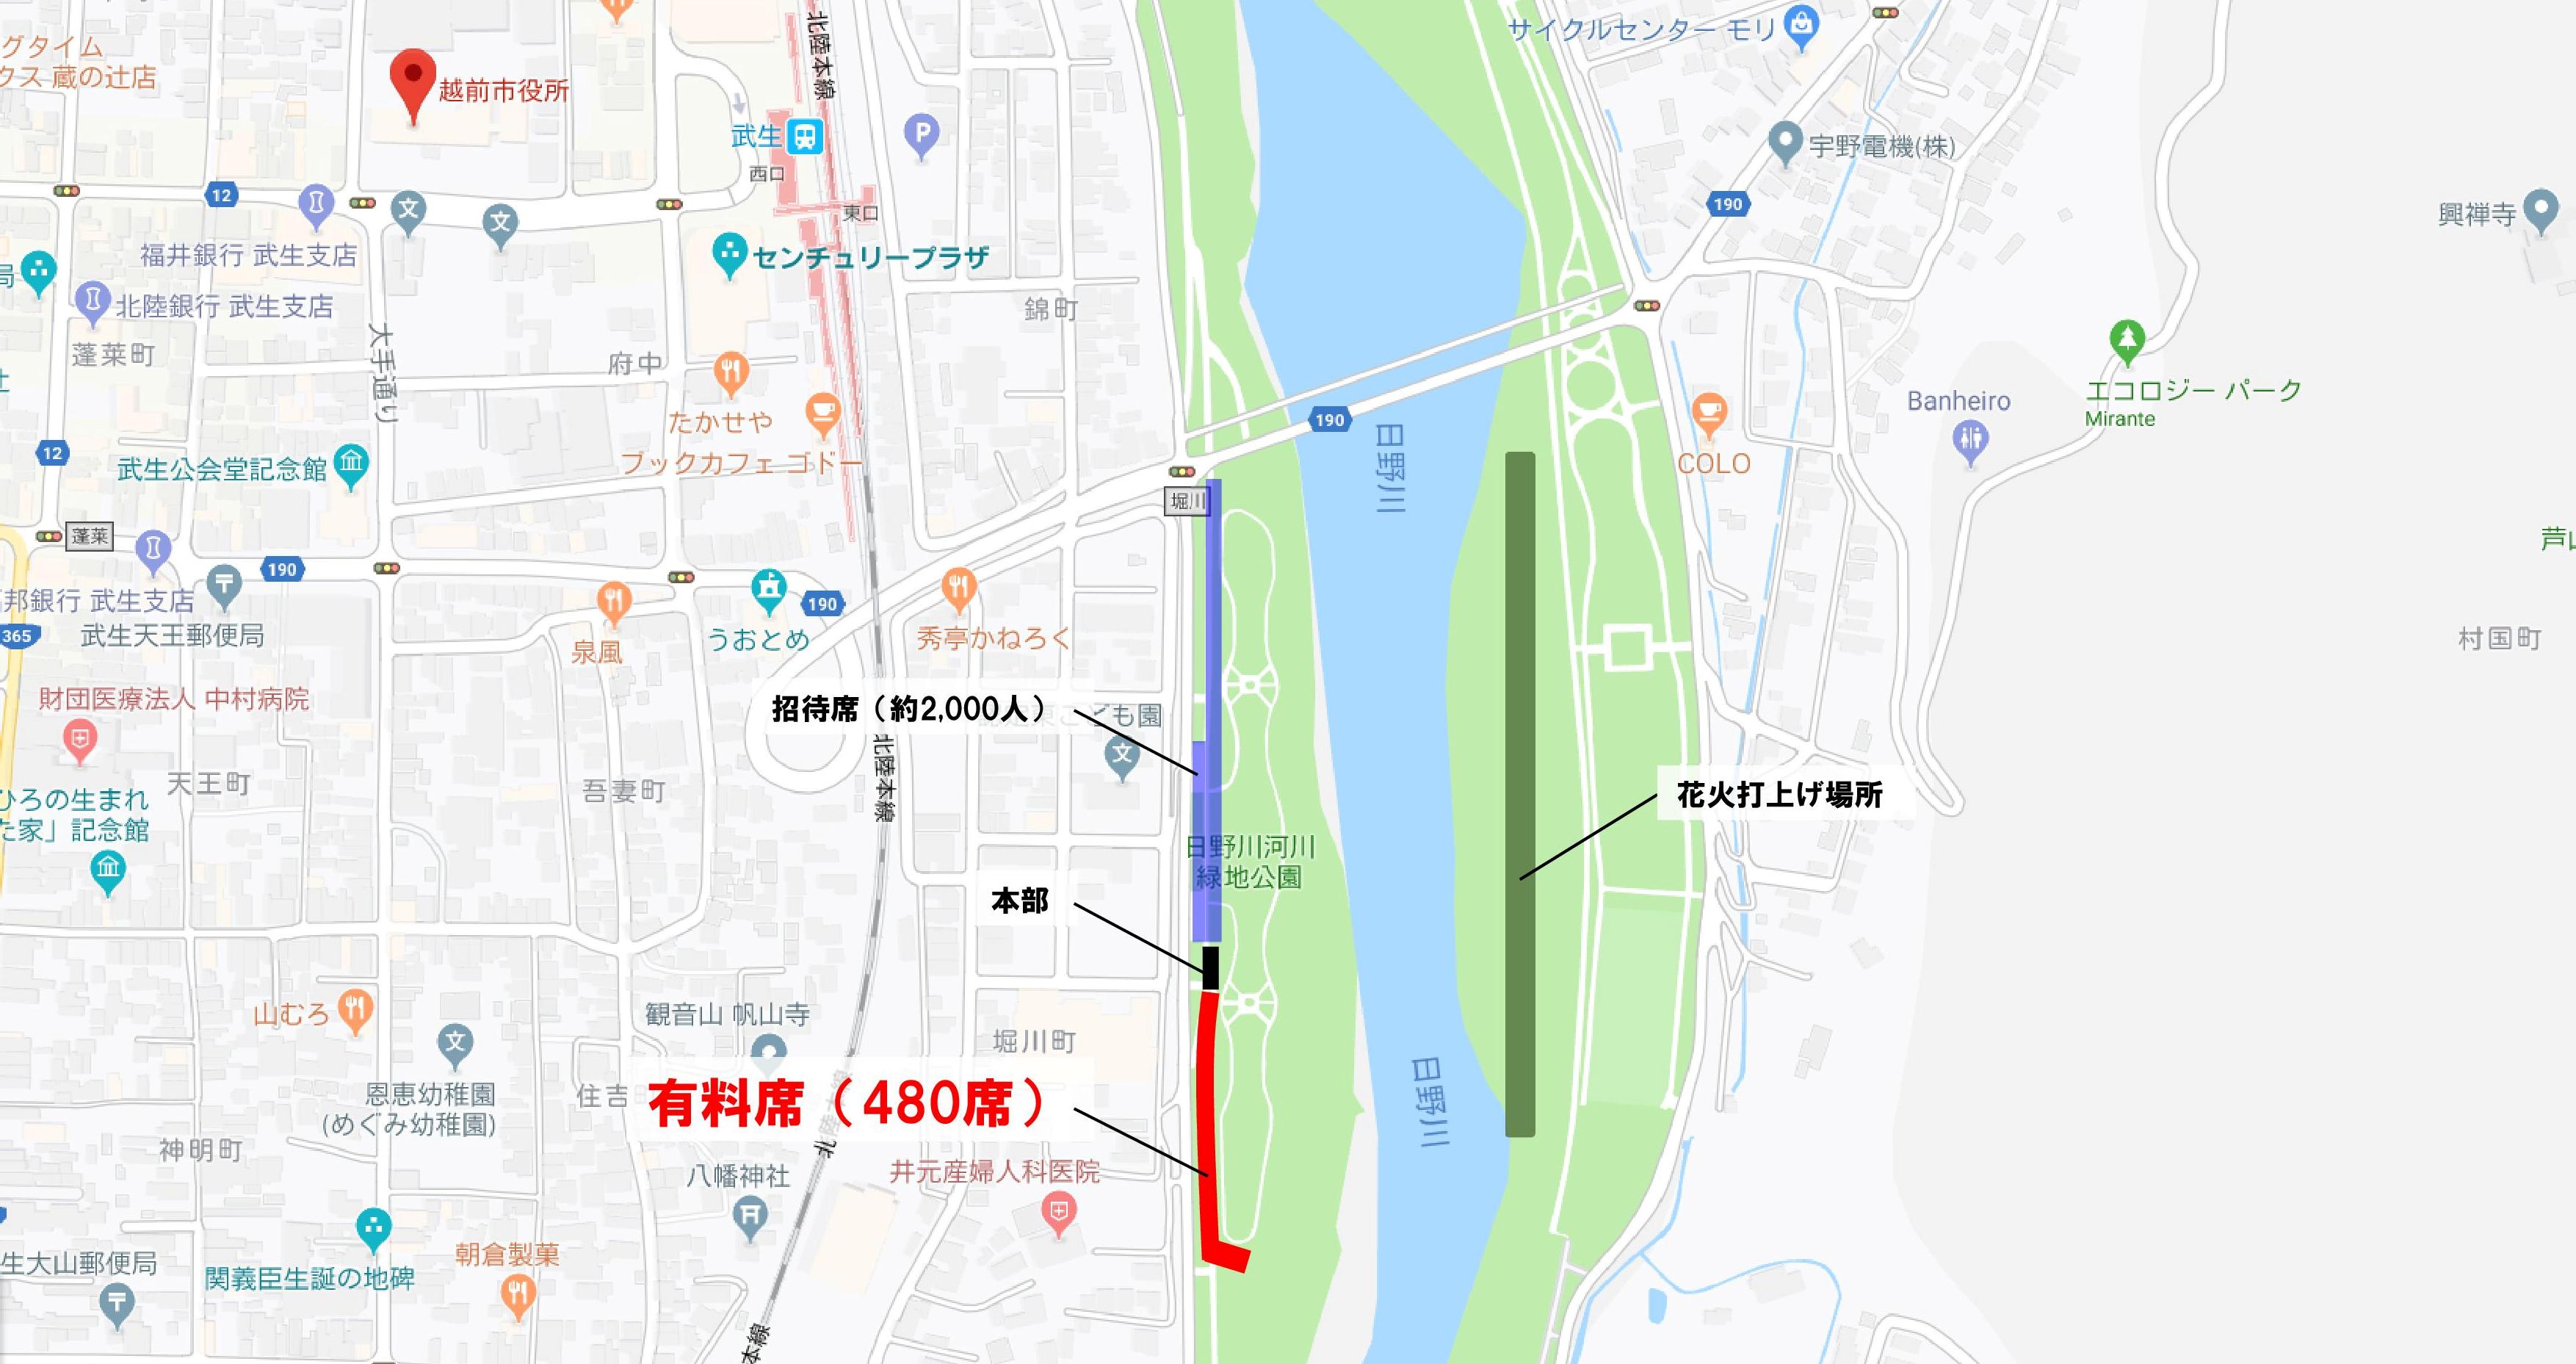 Microsoft PowerPoint - 2019_越前市花火大会_有料席MAP